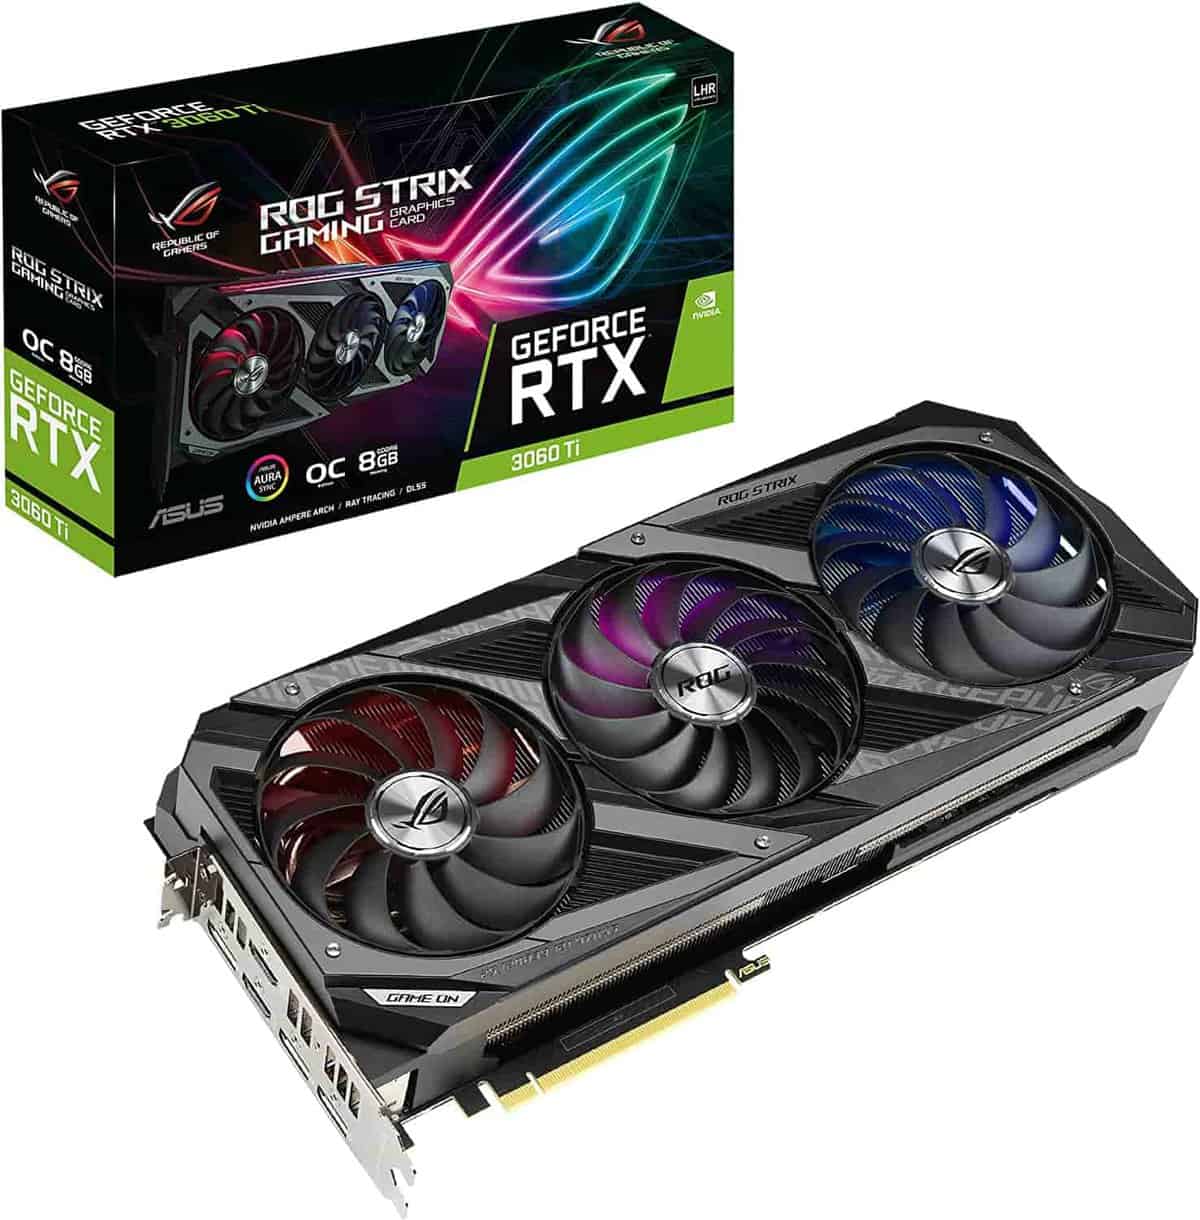 Best NVIDIA GeForce RTX 3060 Ti in 2023 - top GPU for gaming